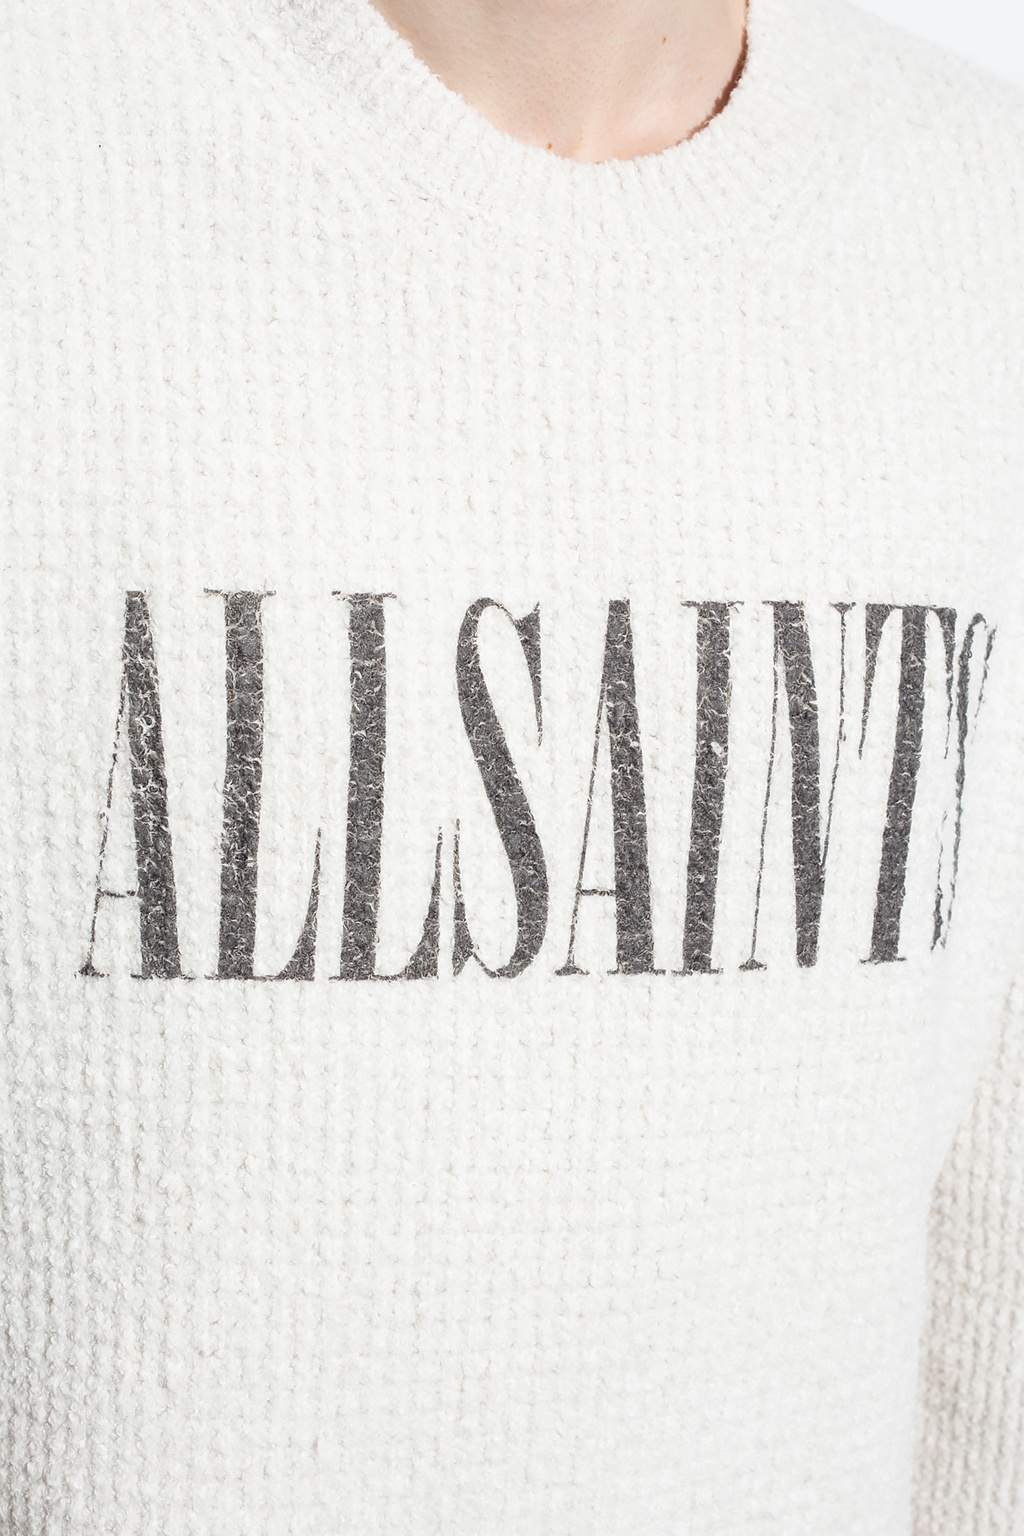 AllSaints ‘Grid’ sweater